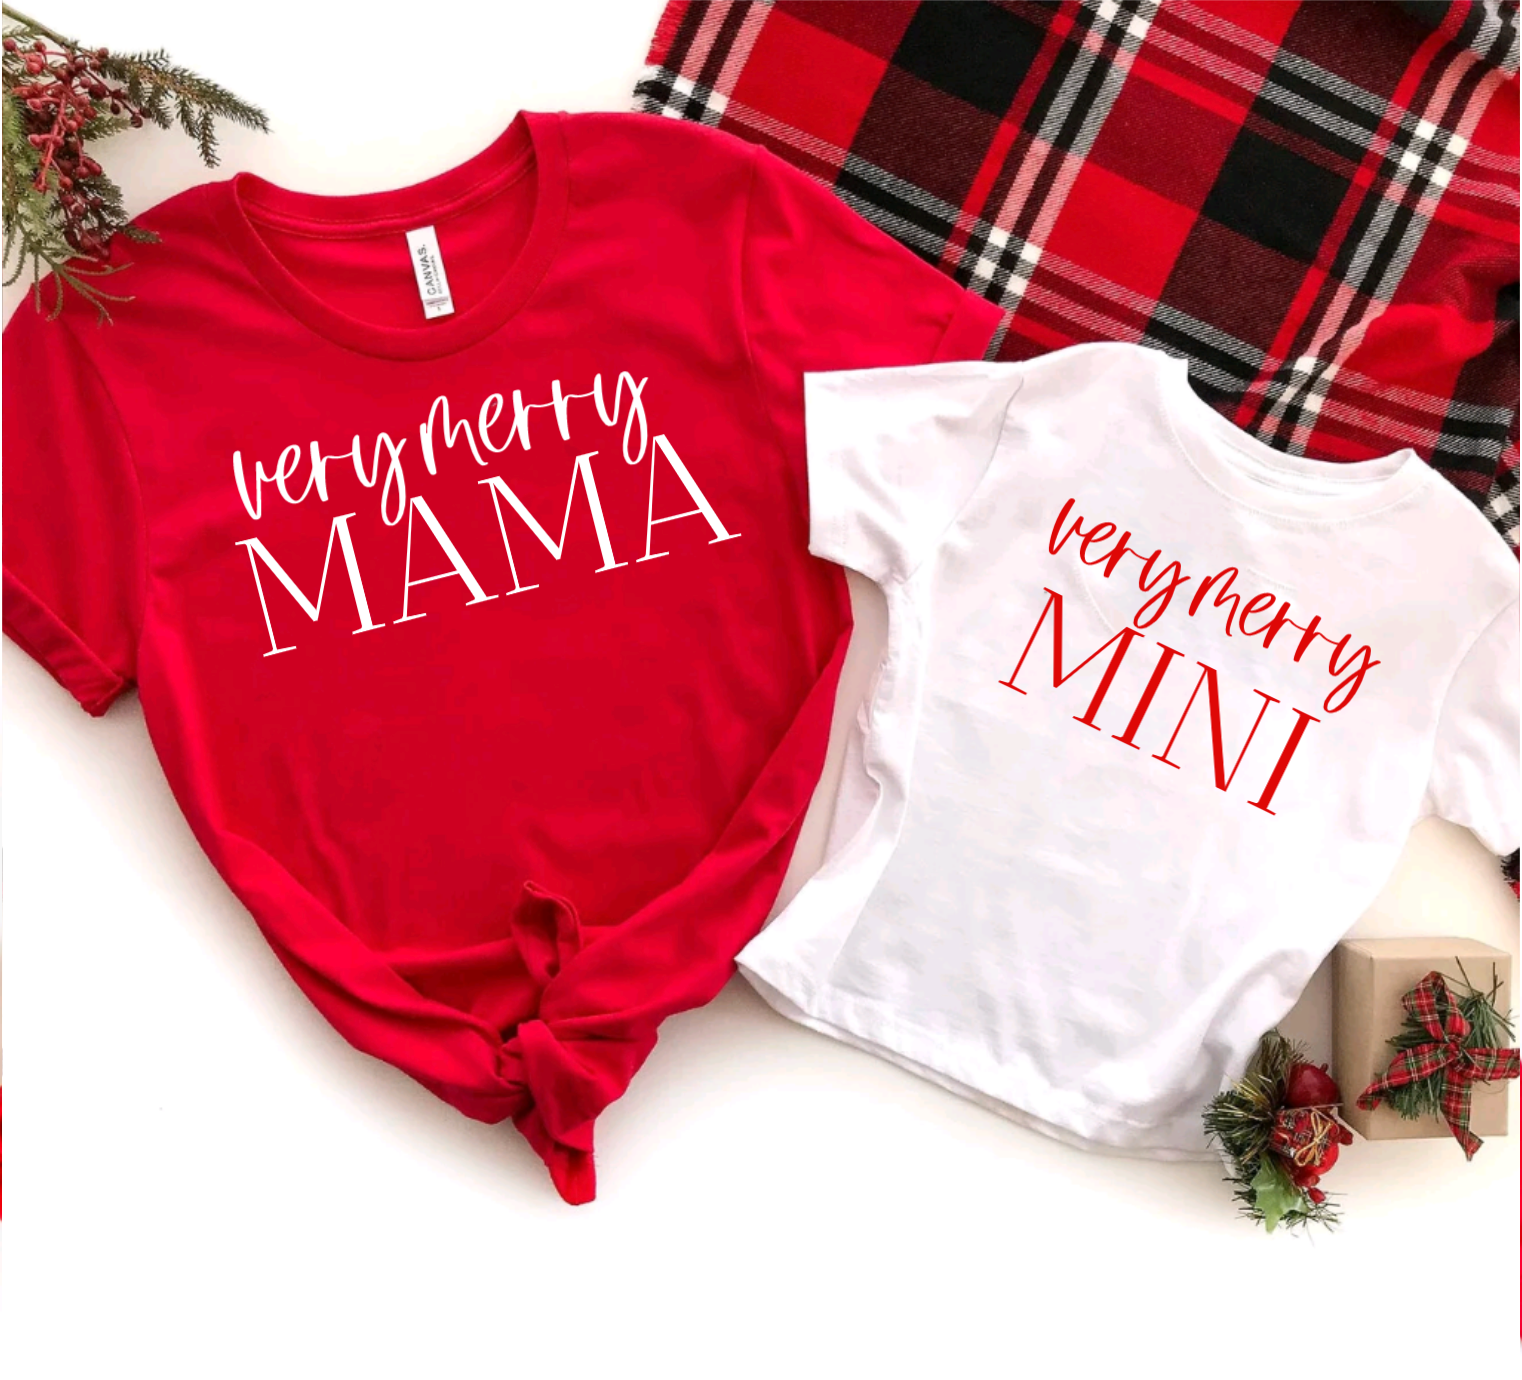 Very Merry Mama and Very Merry Mini Matching Tees